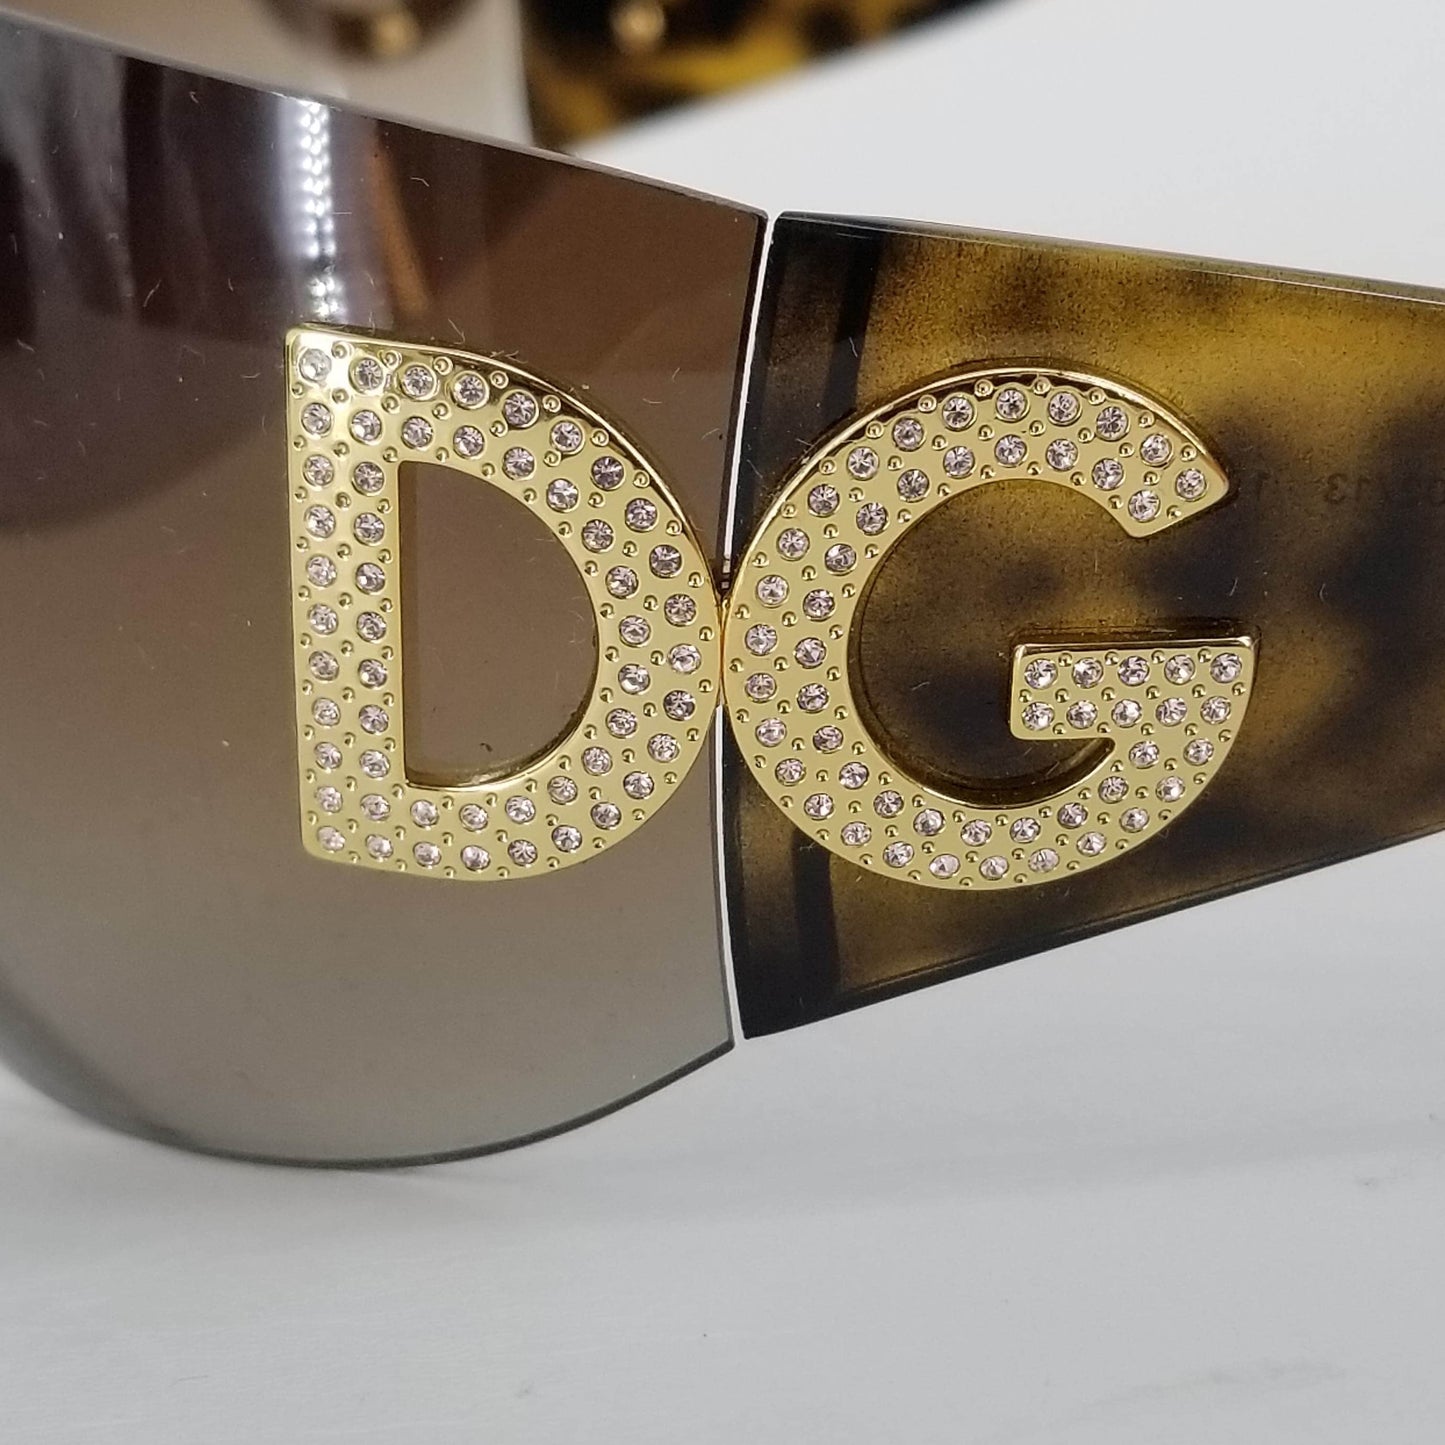 Authentic Dolce & Gabbana Madonna Tortoiseshell Wrap Shield Sunglasses 502/13